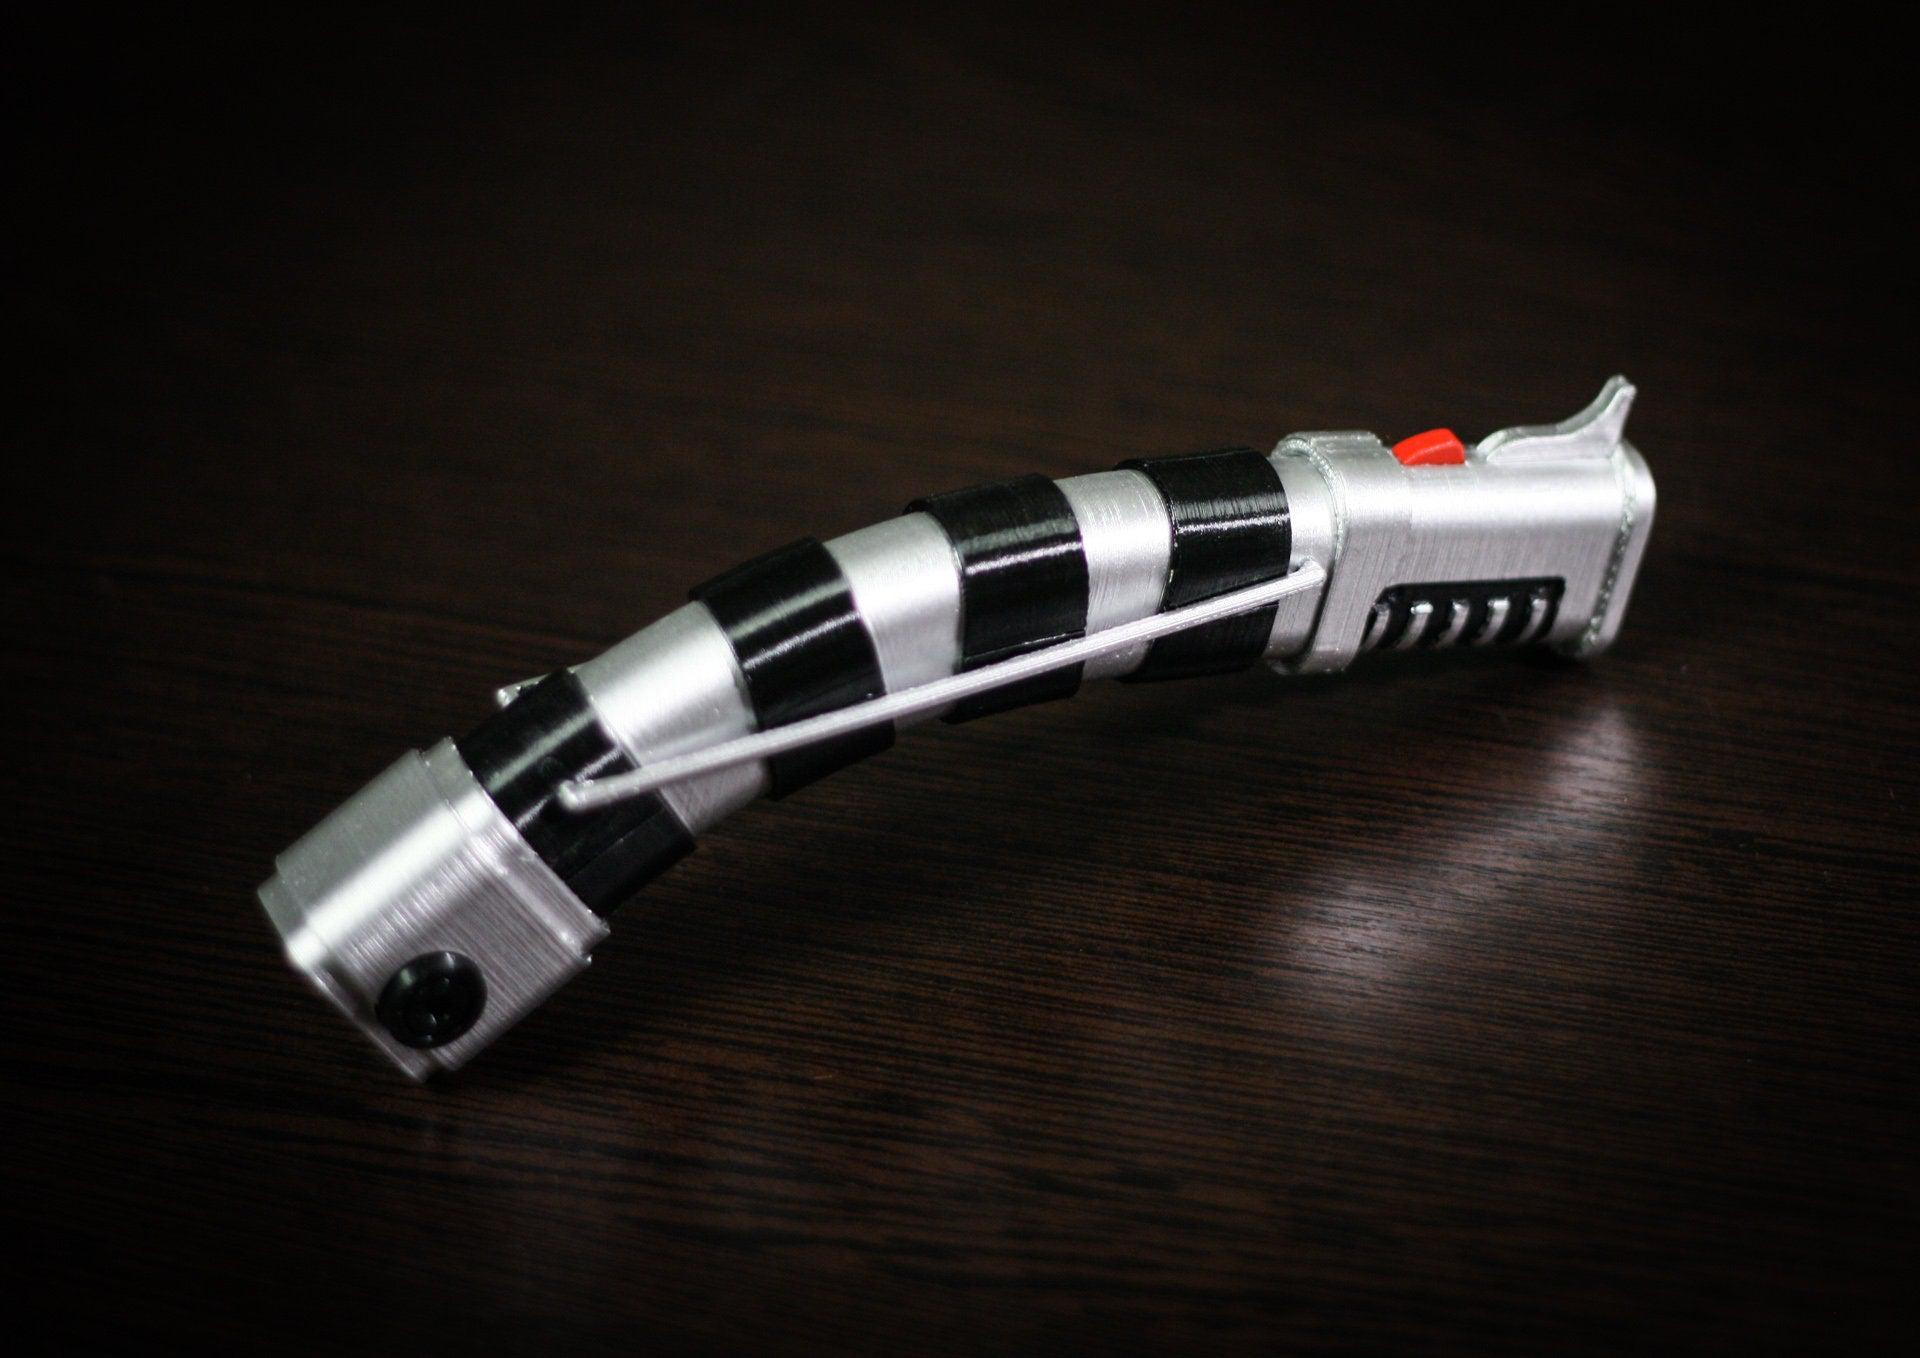 Asajj Ventress' lightsaber | Star Wars Prop weapon replica - 3DPrintProps